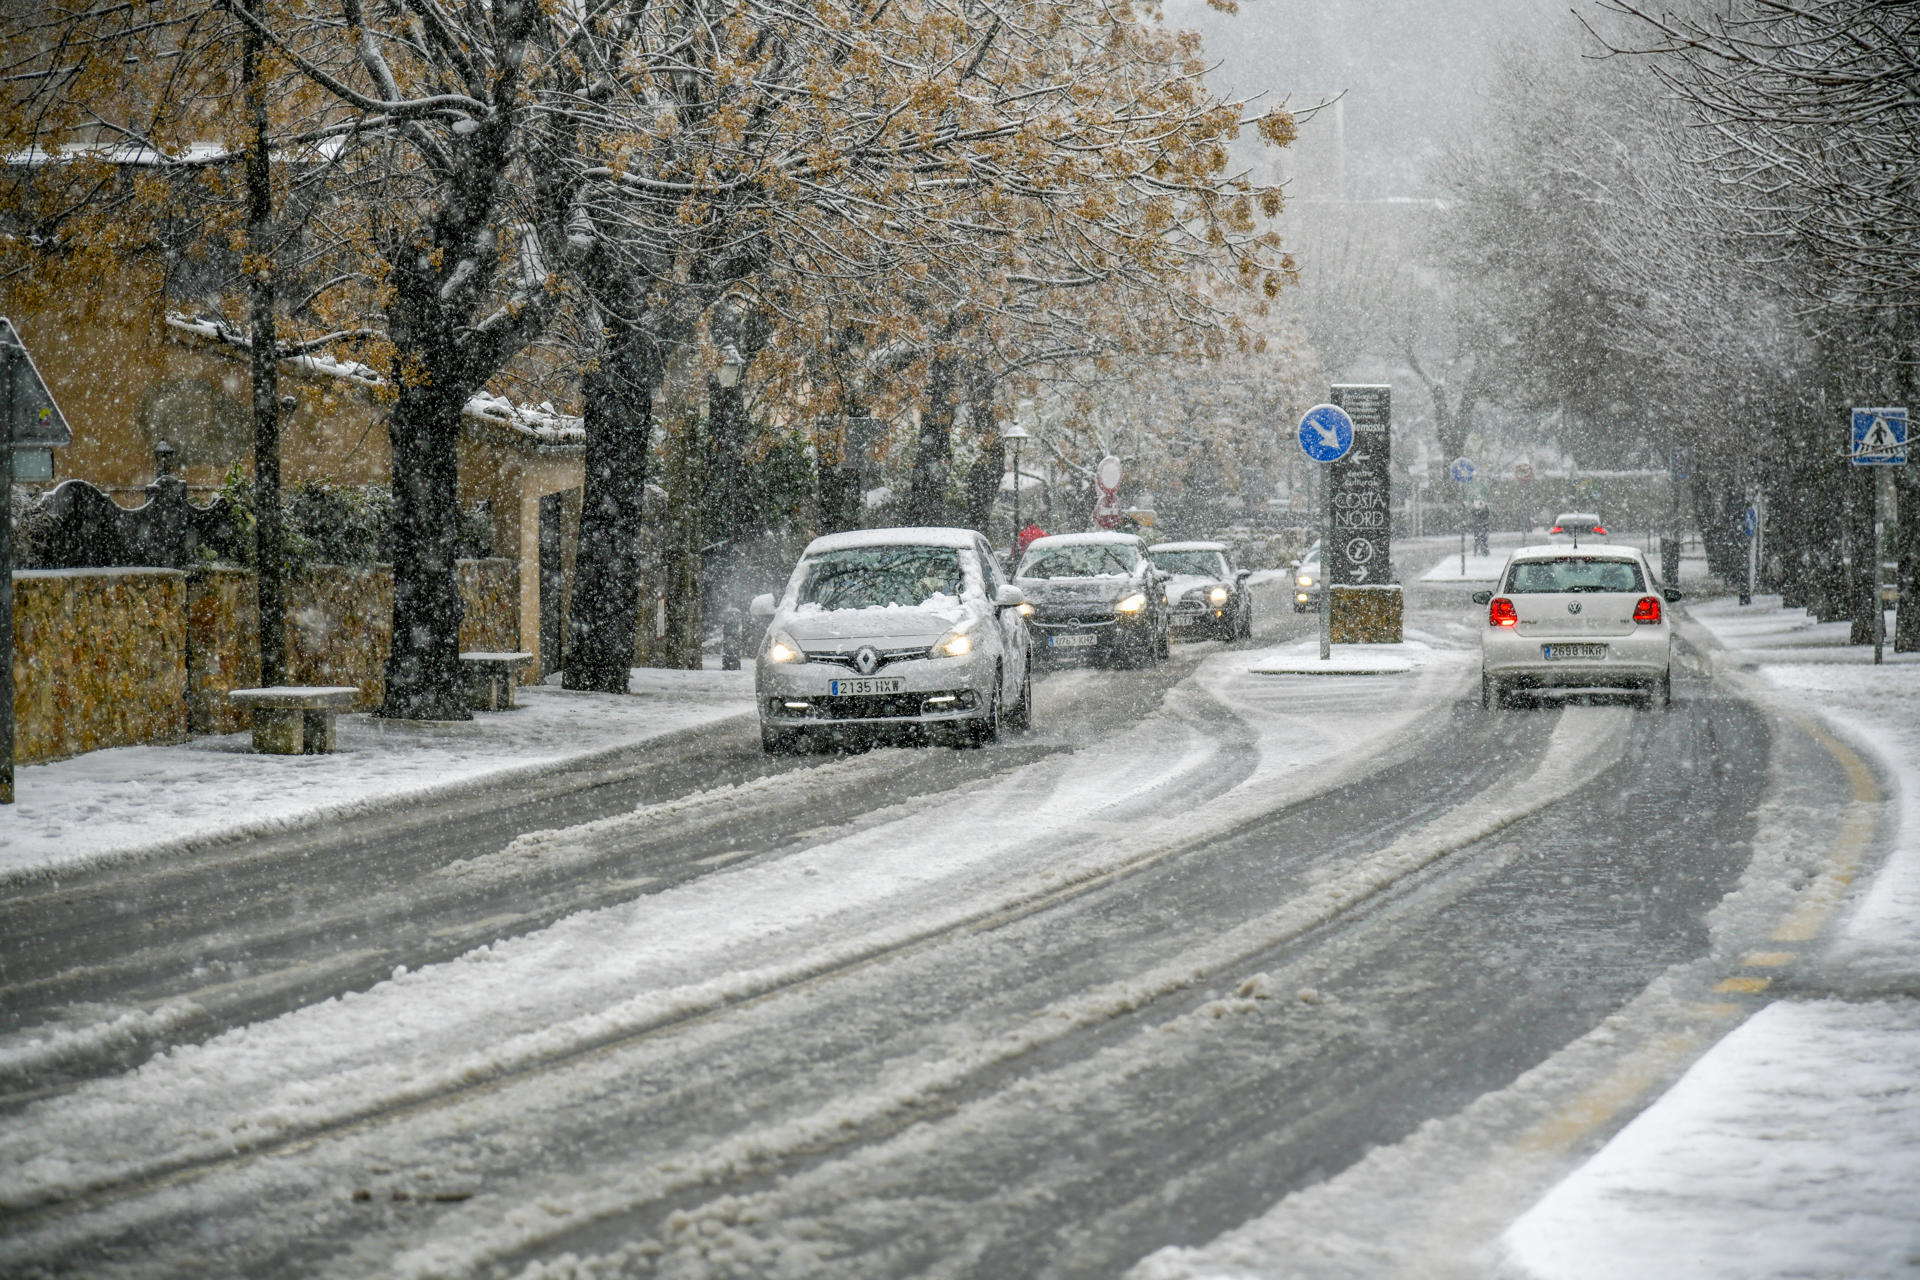 Varios coches circulan por las calles nevadas de la región mallorquina de Valldemossa. EFE/CATI CLADERA